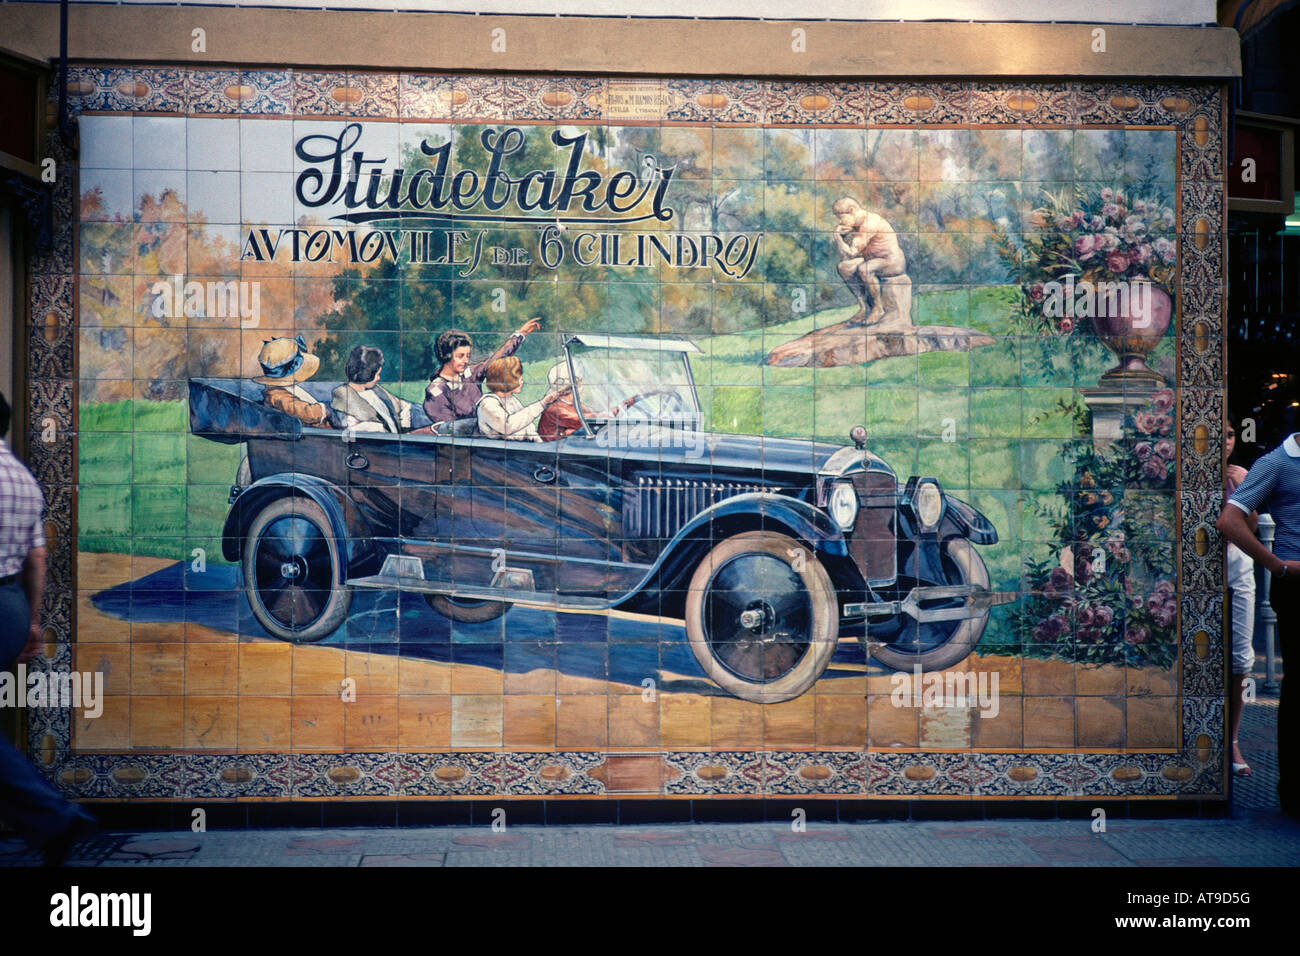 Ceramic tile mural advertising the 1924 Studebaker automobile in Seville Spain Stock Photo